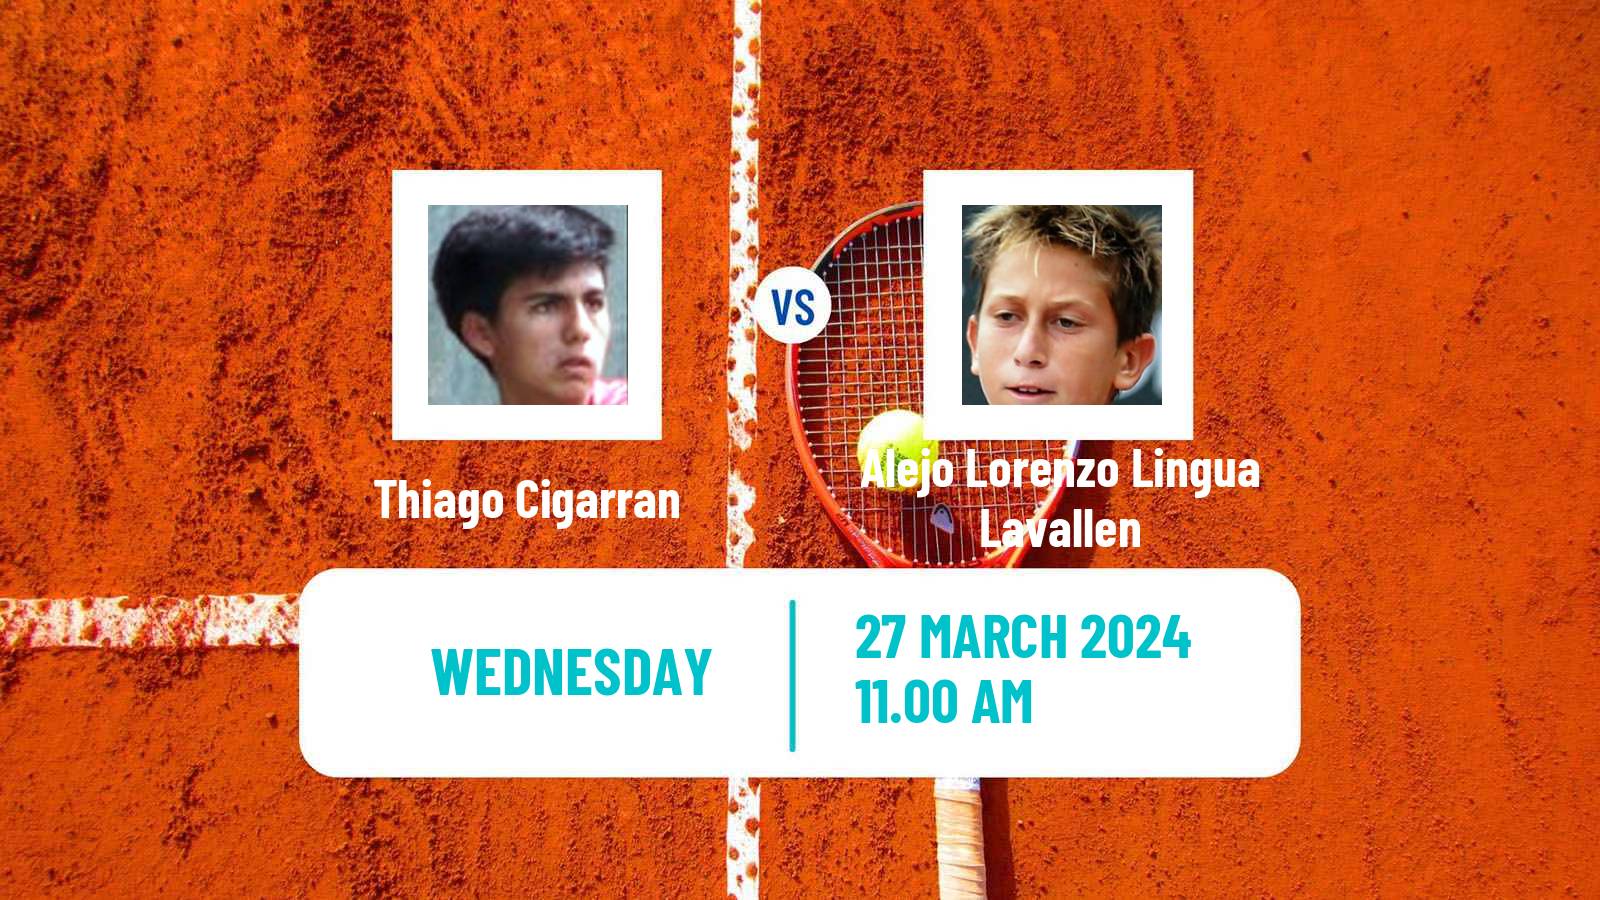 Tennis ITF M15 Bragado Men Thiago Cigarran - Alejo Lorenzo Lingua Lavallen